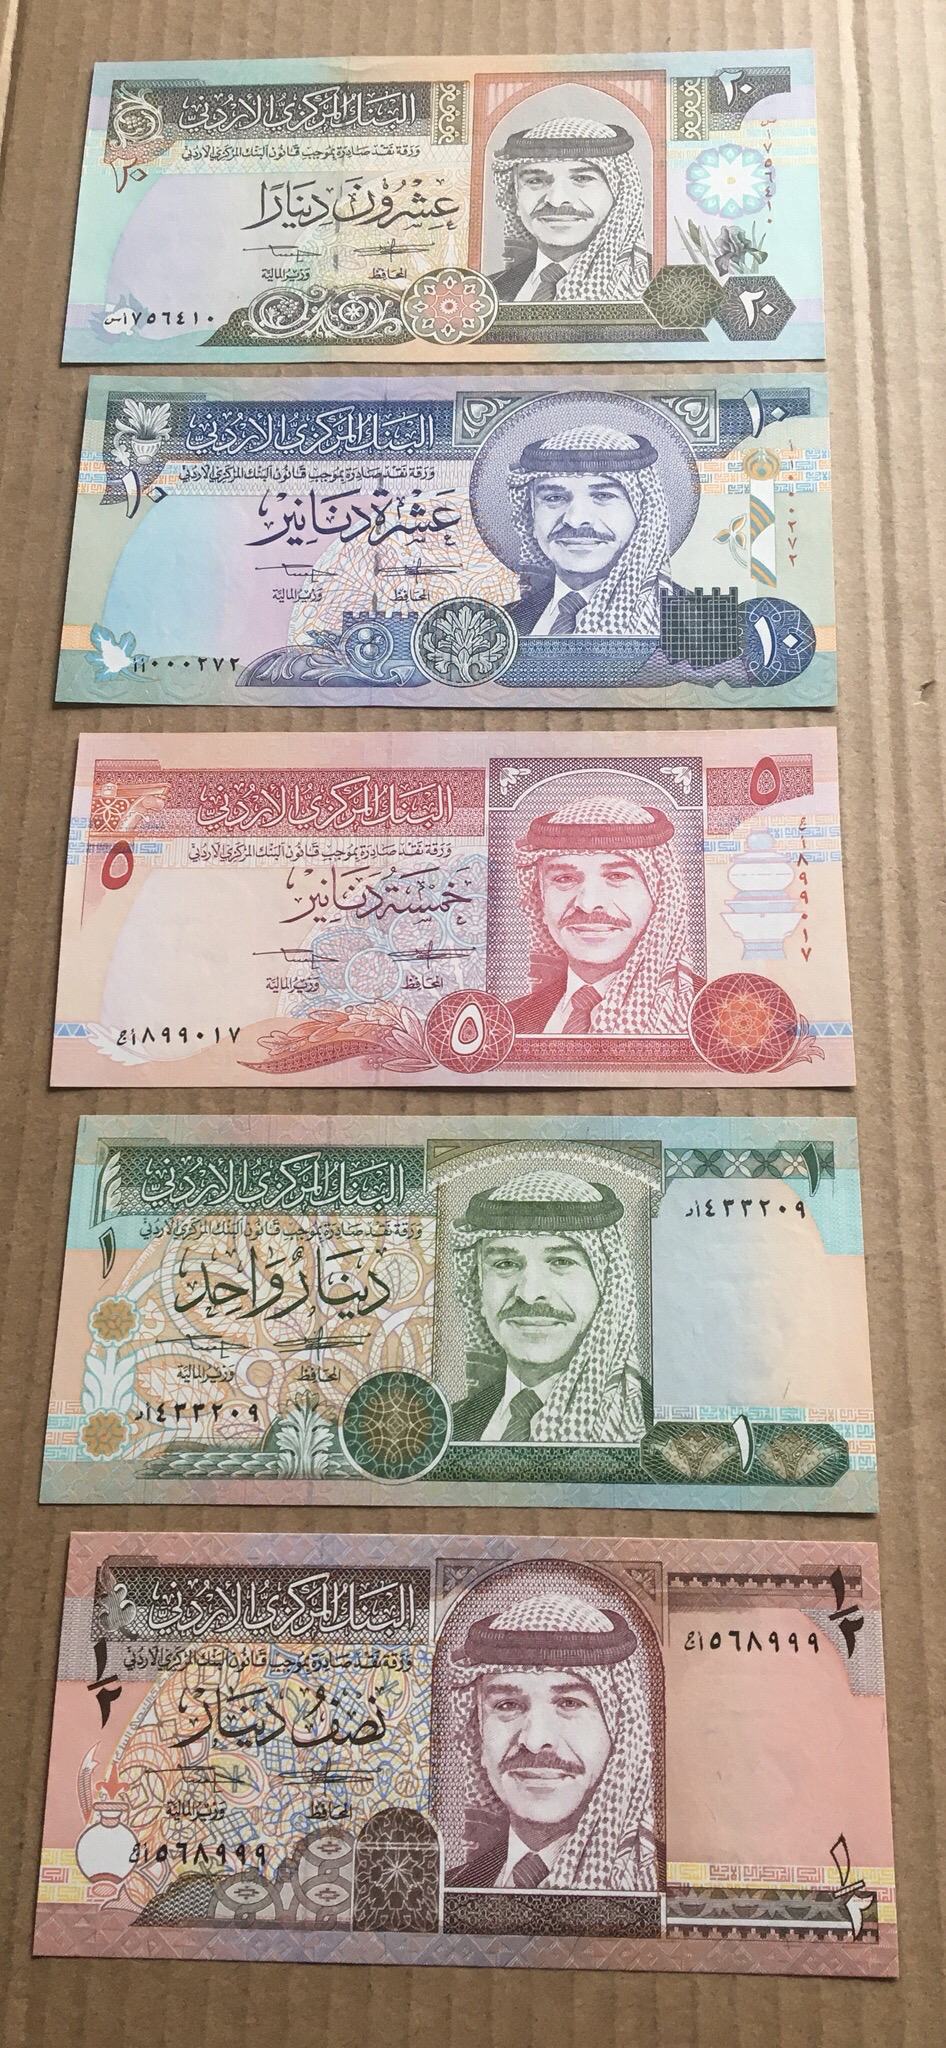 1992 Jordan Complete Set of 5 Banknotes 1/2 1 5 10 20 Dinar P-23 24 25 26 27 UNC